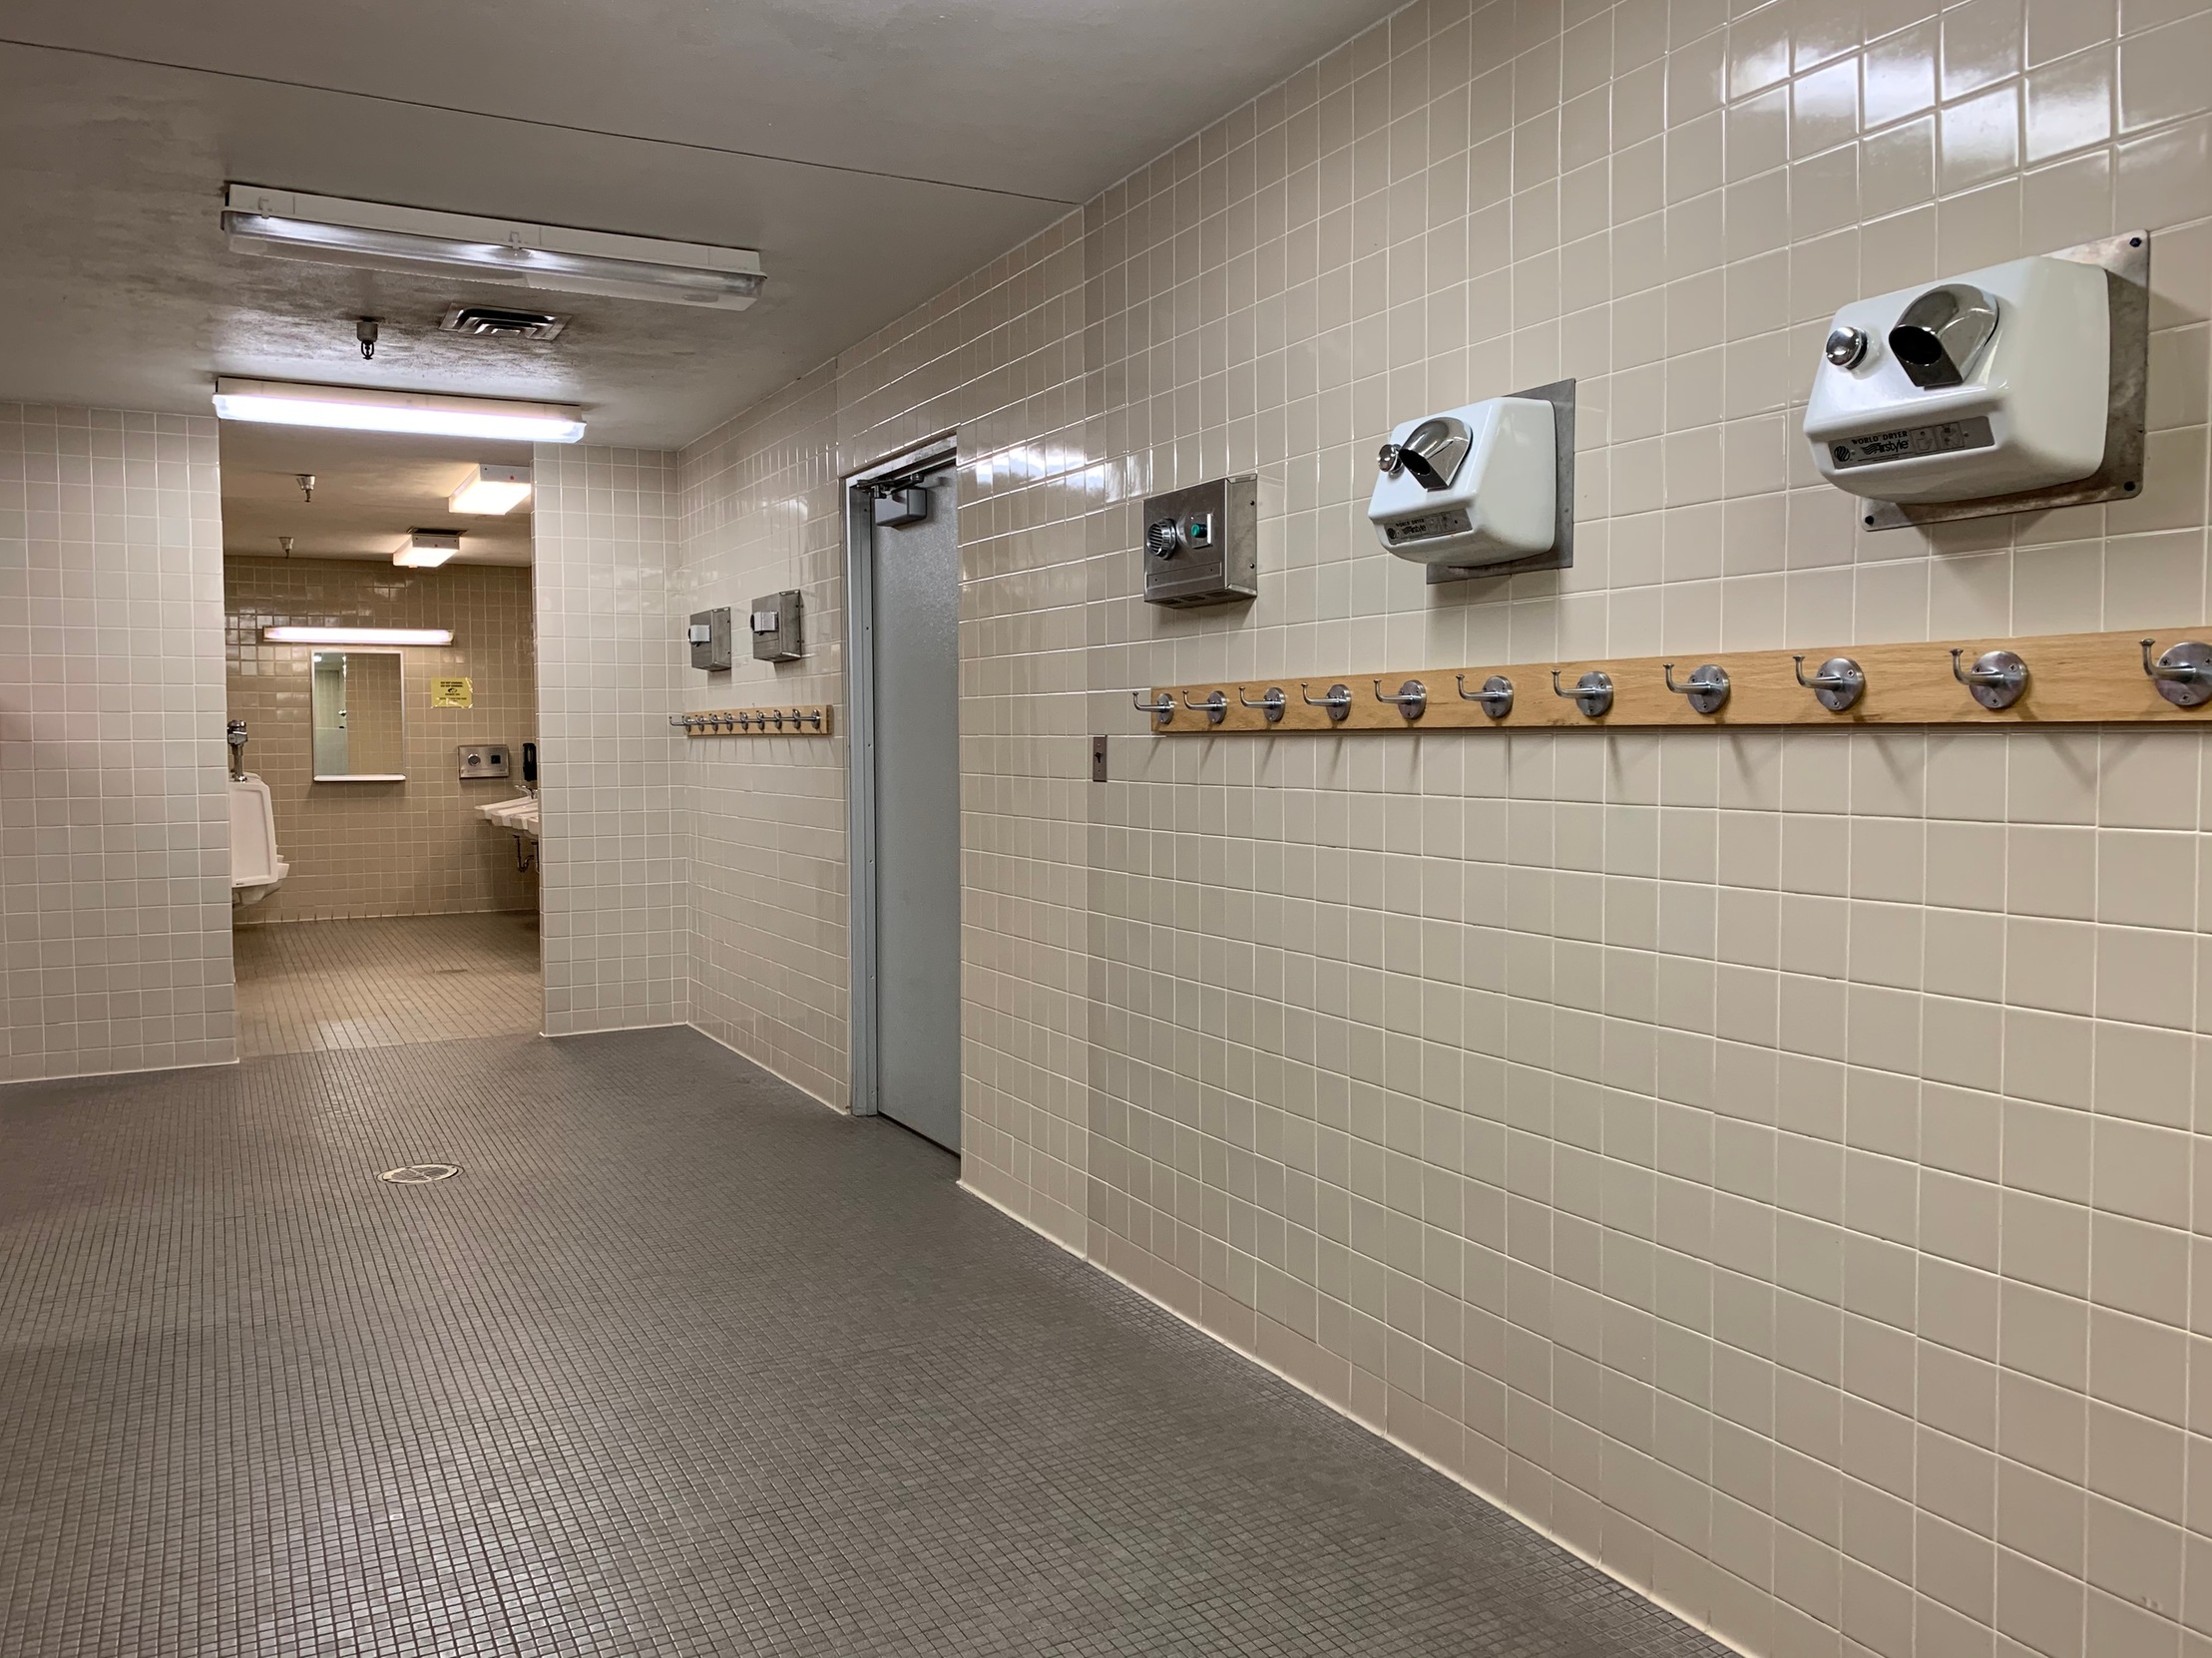 Shower Area, Men's Public Locker Room 110